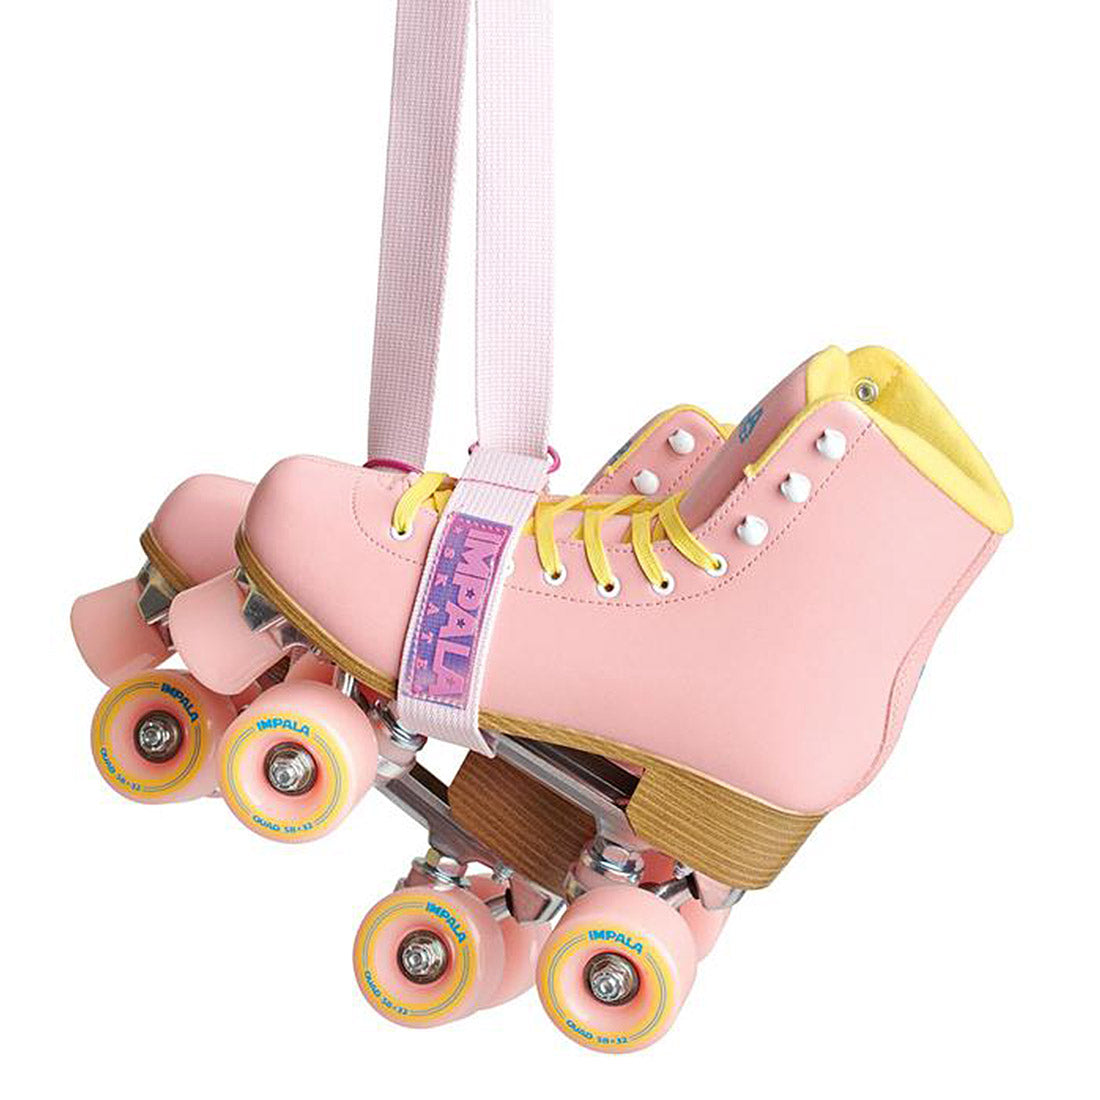 Impala Skate Strap - Pink Roller Skate Accessories